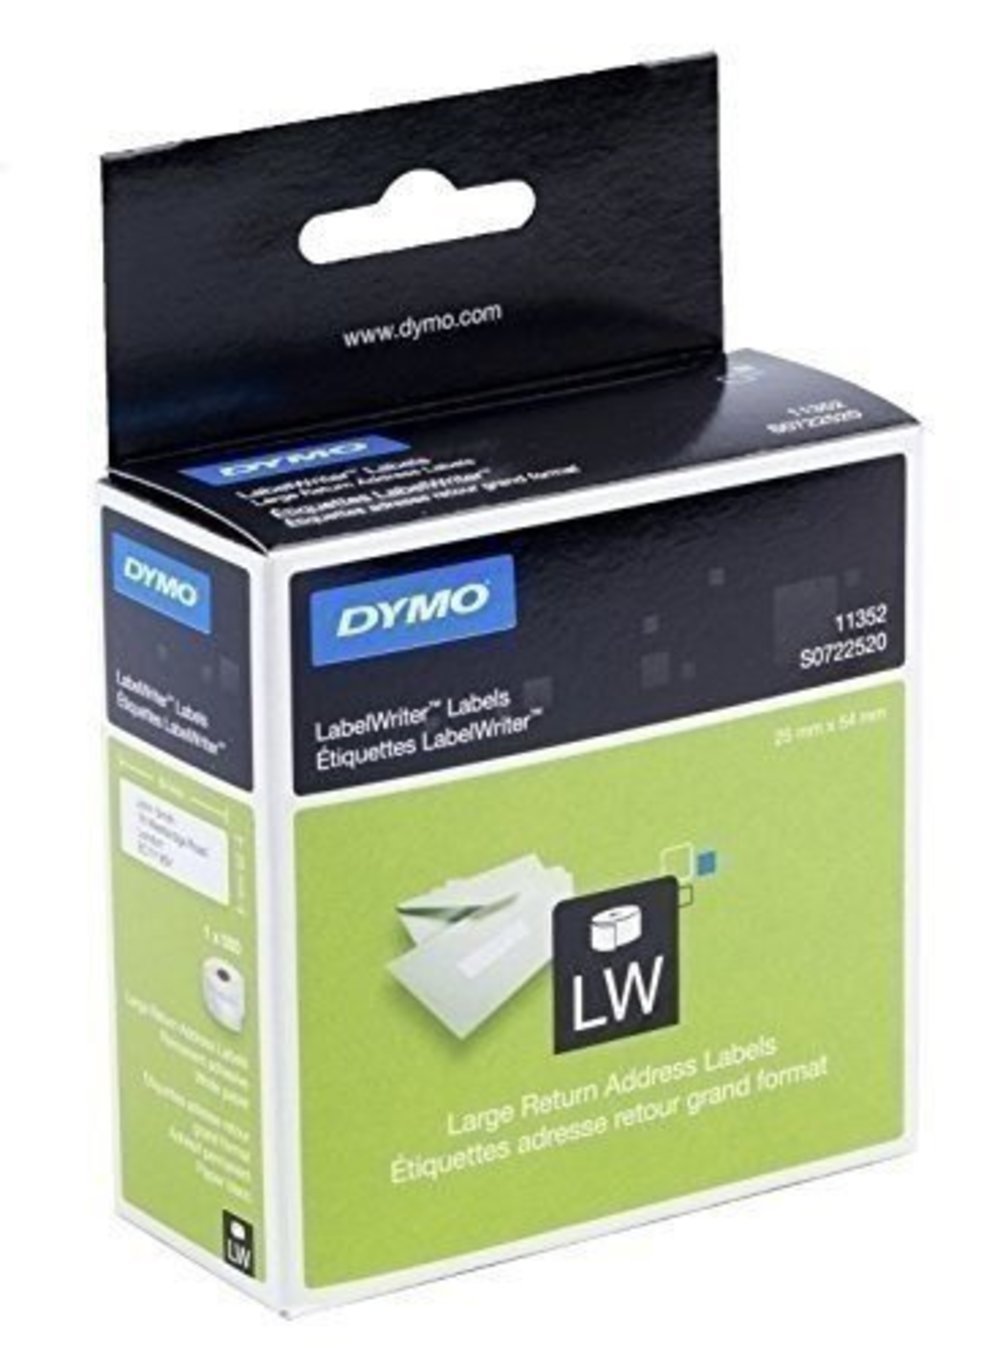 DYMO LW-Rücksendeadress-Etiketten groß.1 Rolle á 500 Etikett